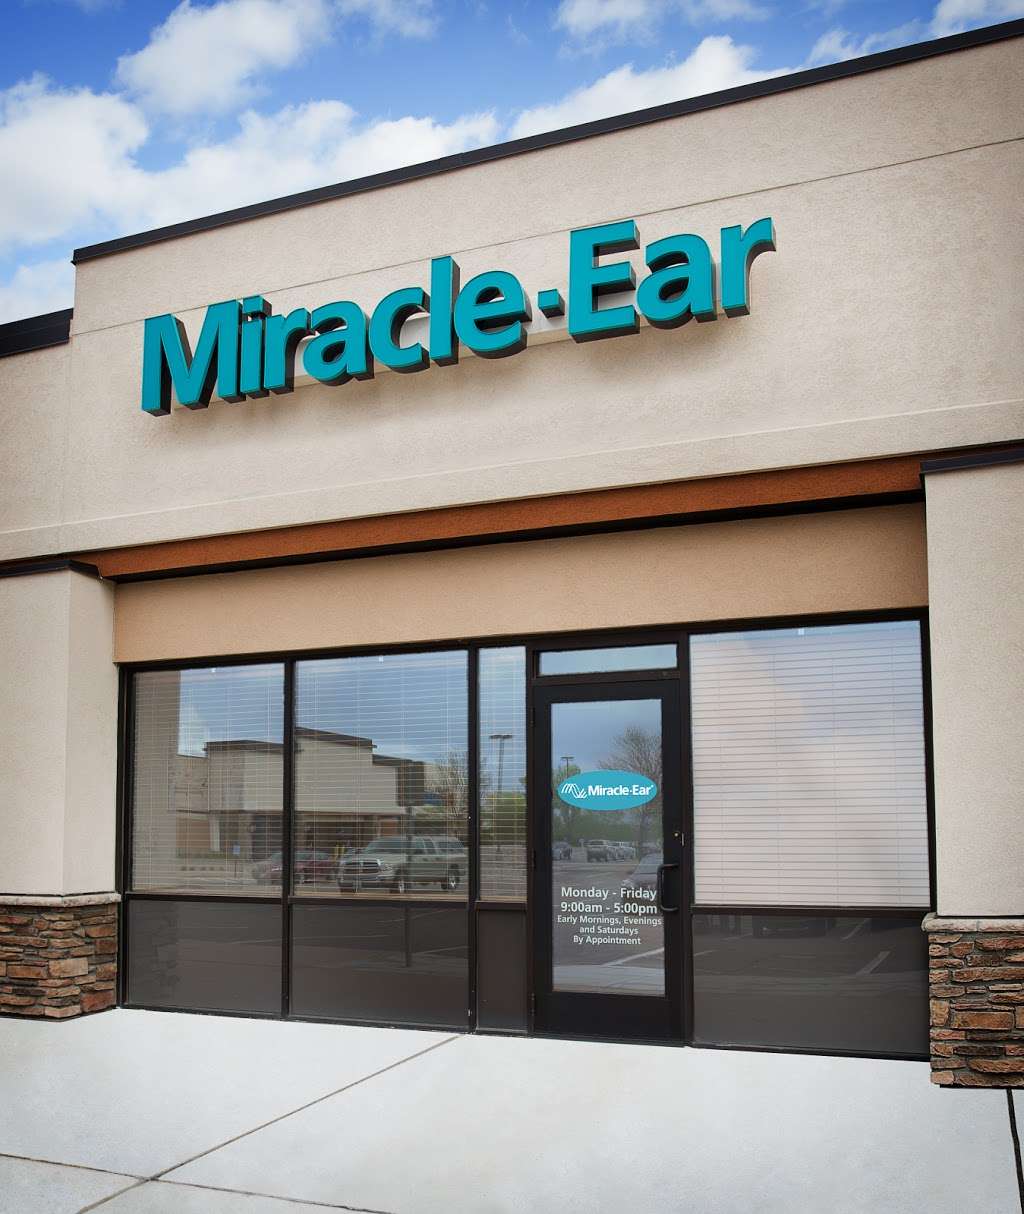 Miracle-Ear | 7410 W 119th St, Overland Park, KS 66213 | Phone: (913) 971-0285